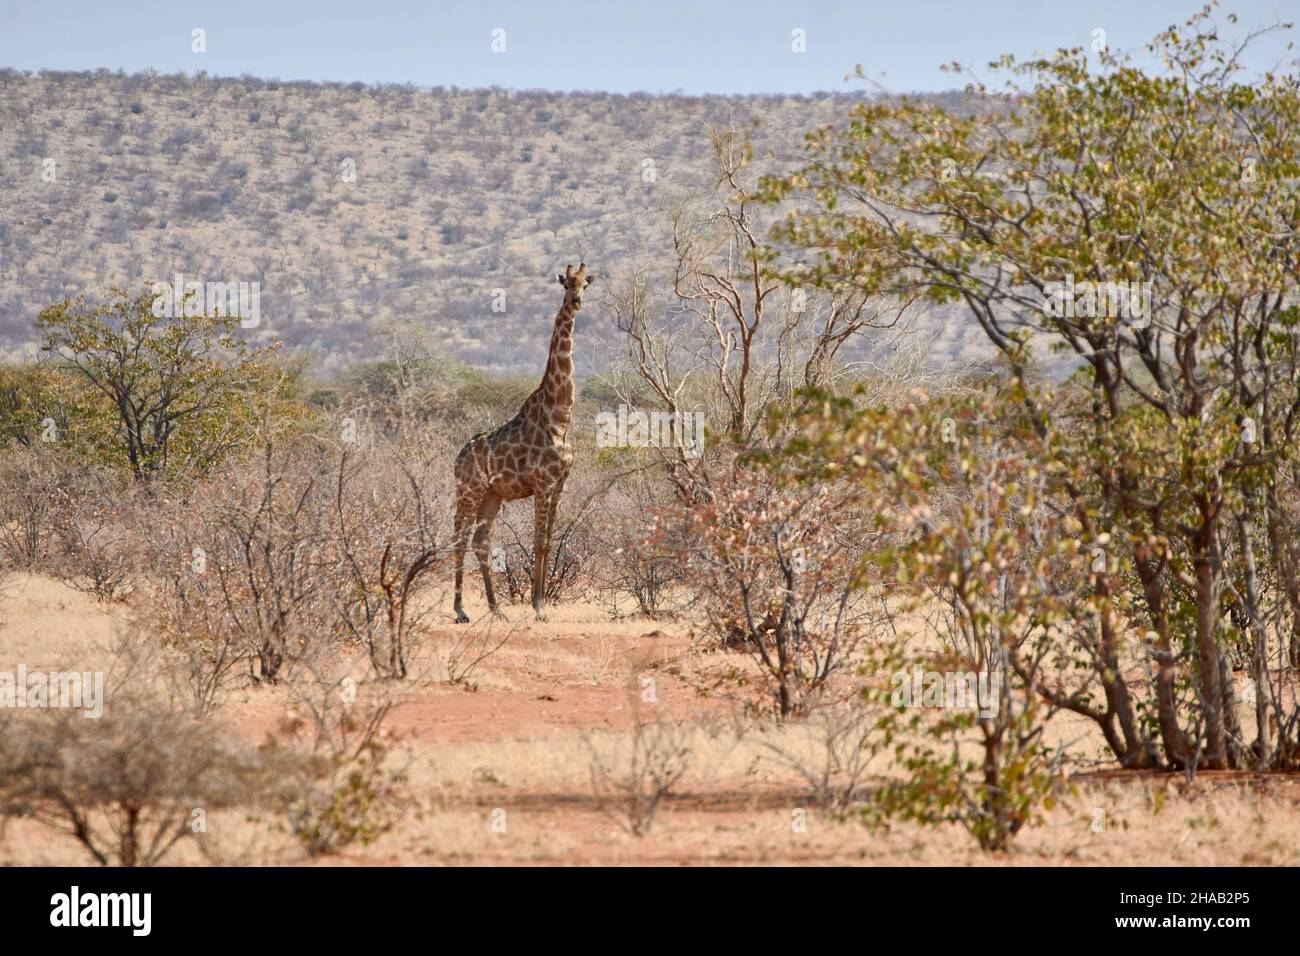 One Angolan giraffe (Giraffa camelopardalis angolensis) in African landscape at Etosha national park, Namibia. Stock Photo